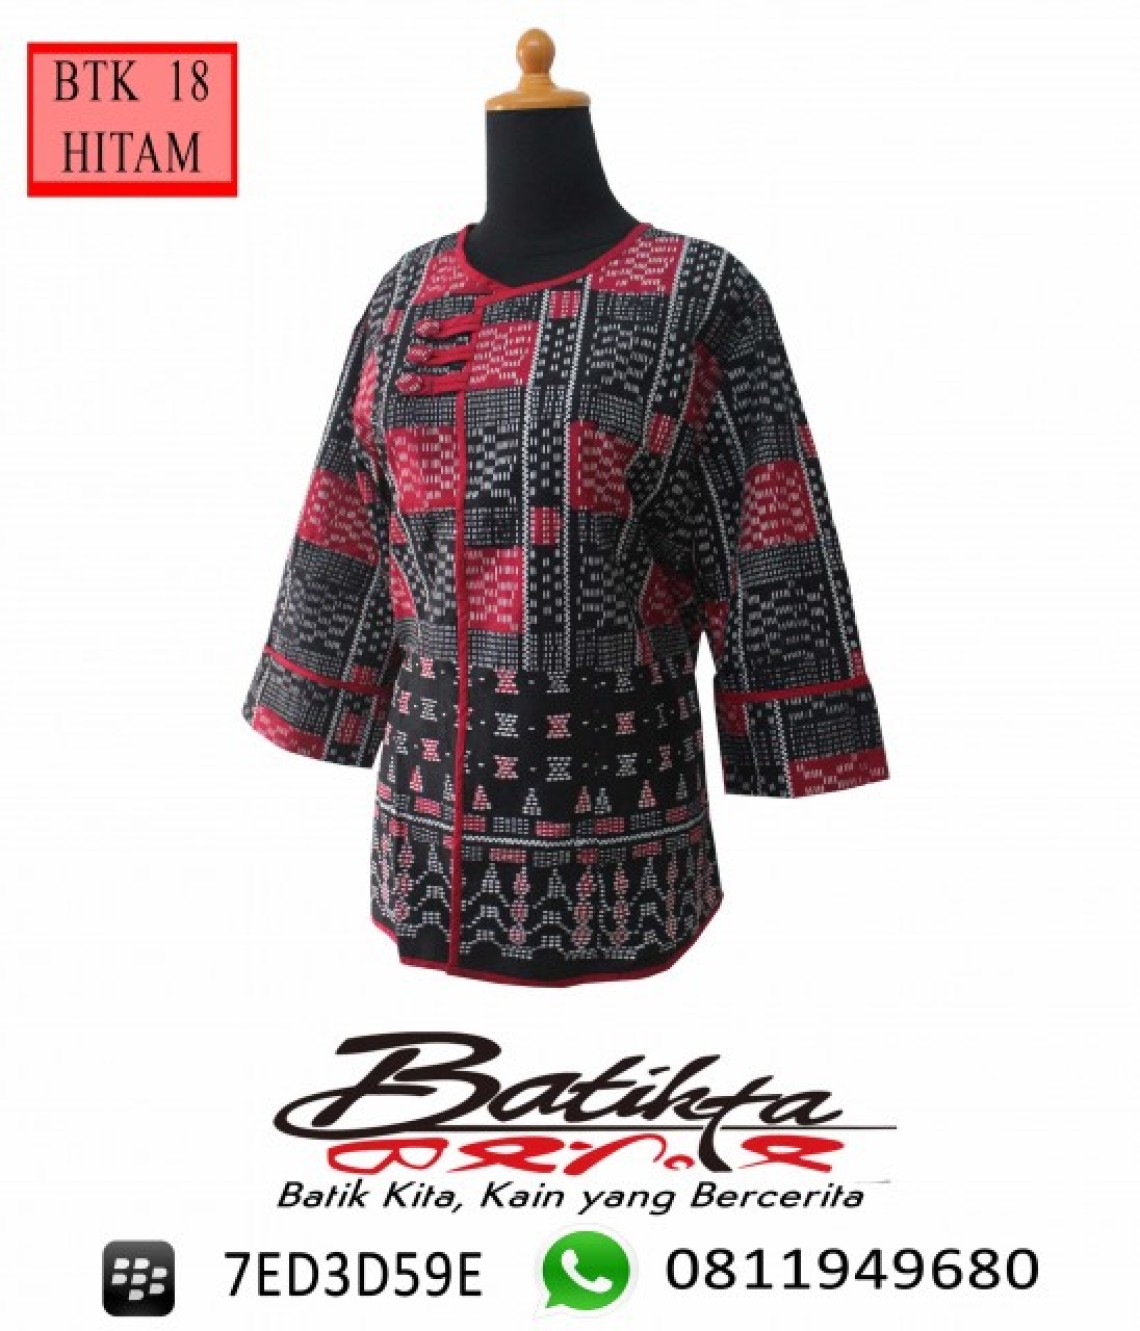 BTK18 Blus Batik Motif Ulos Sadum Warna Hitam Merah Putih profile picture